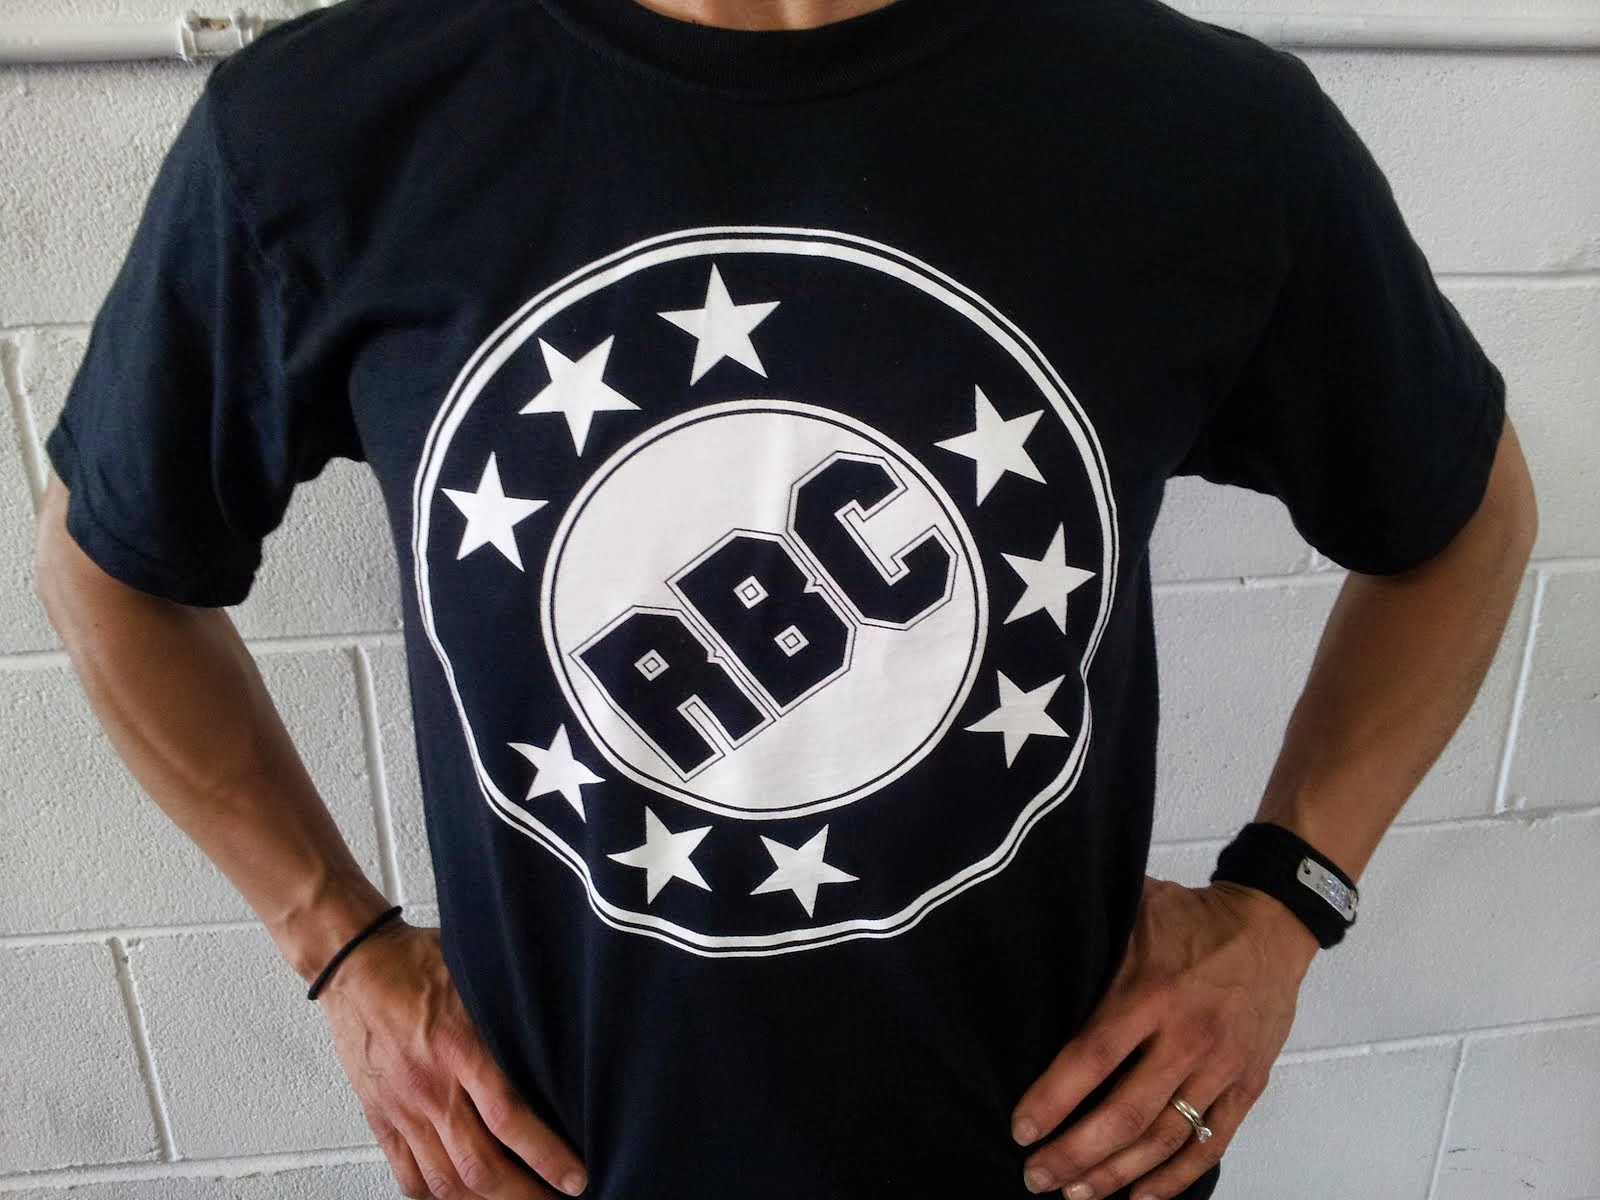 RBC shirts